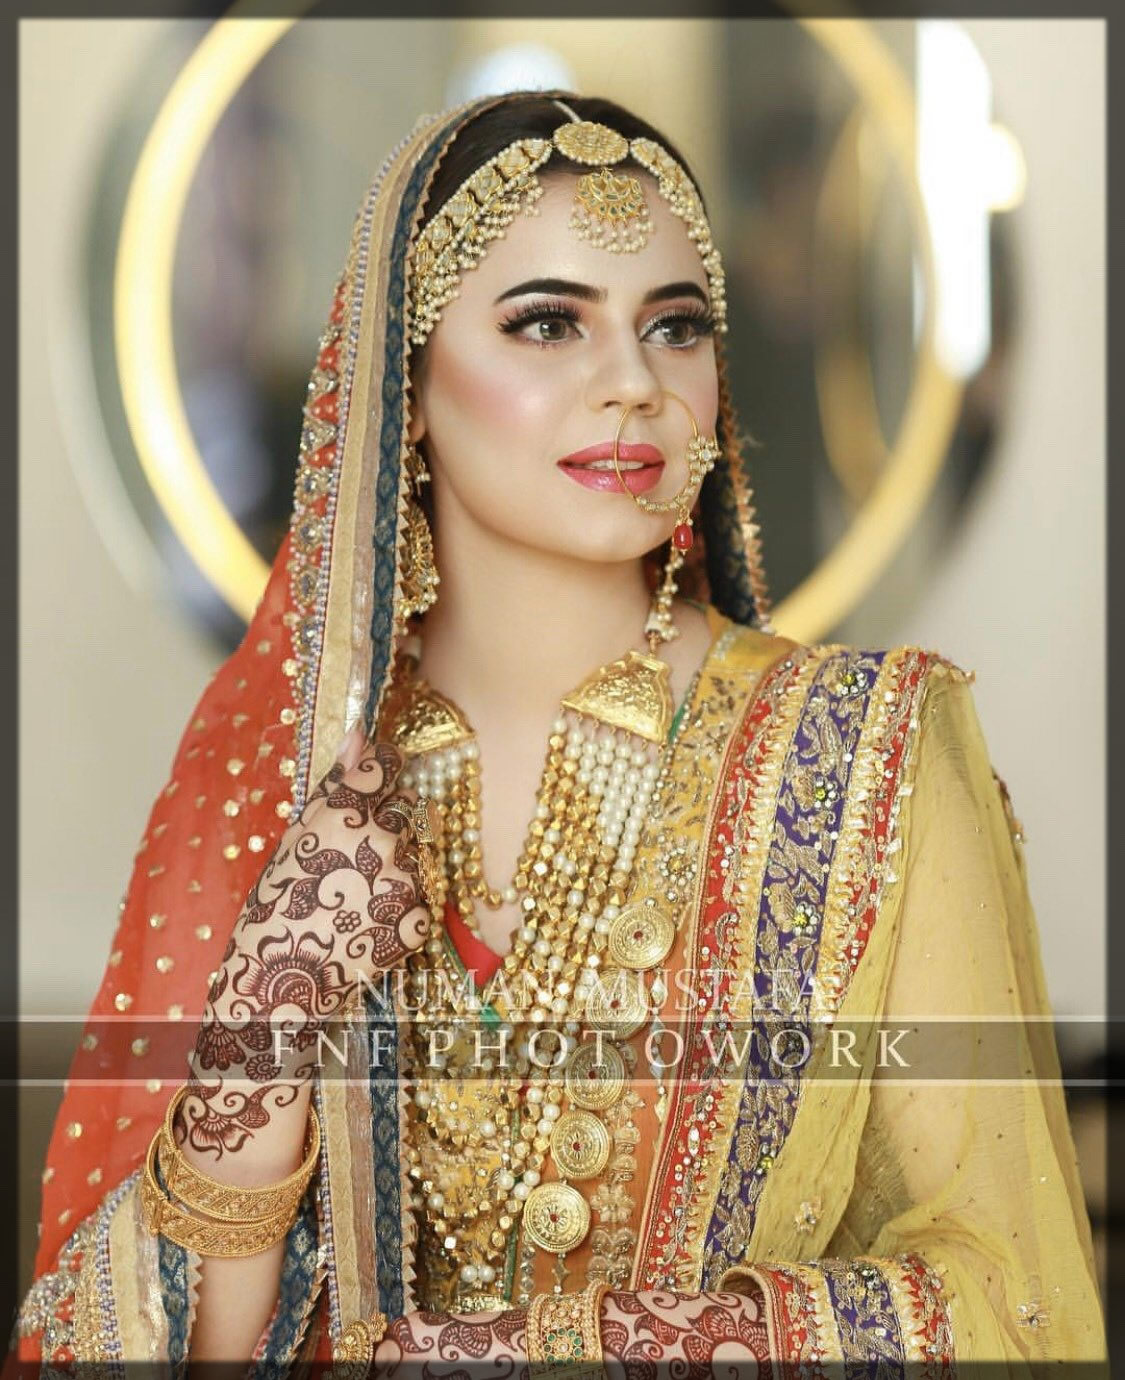 stylish mahru haider wearing head jewelry